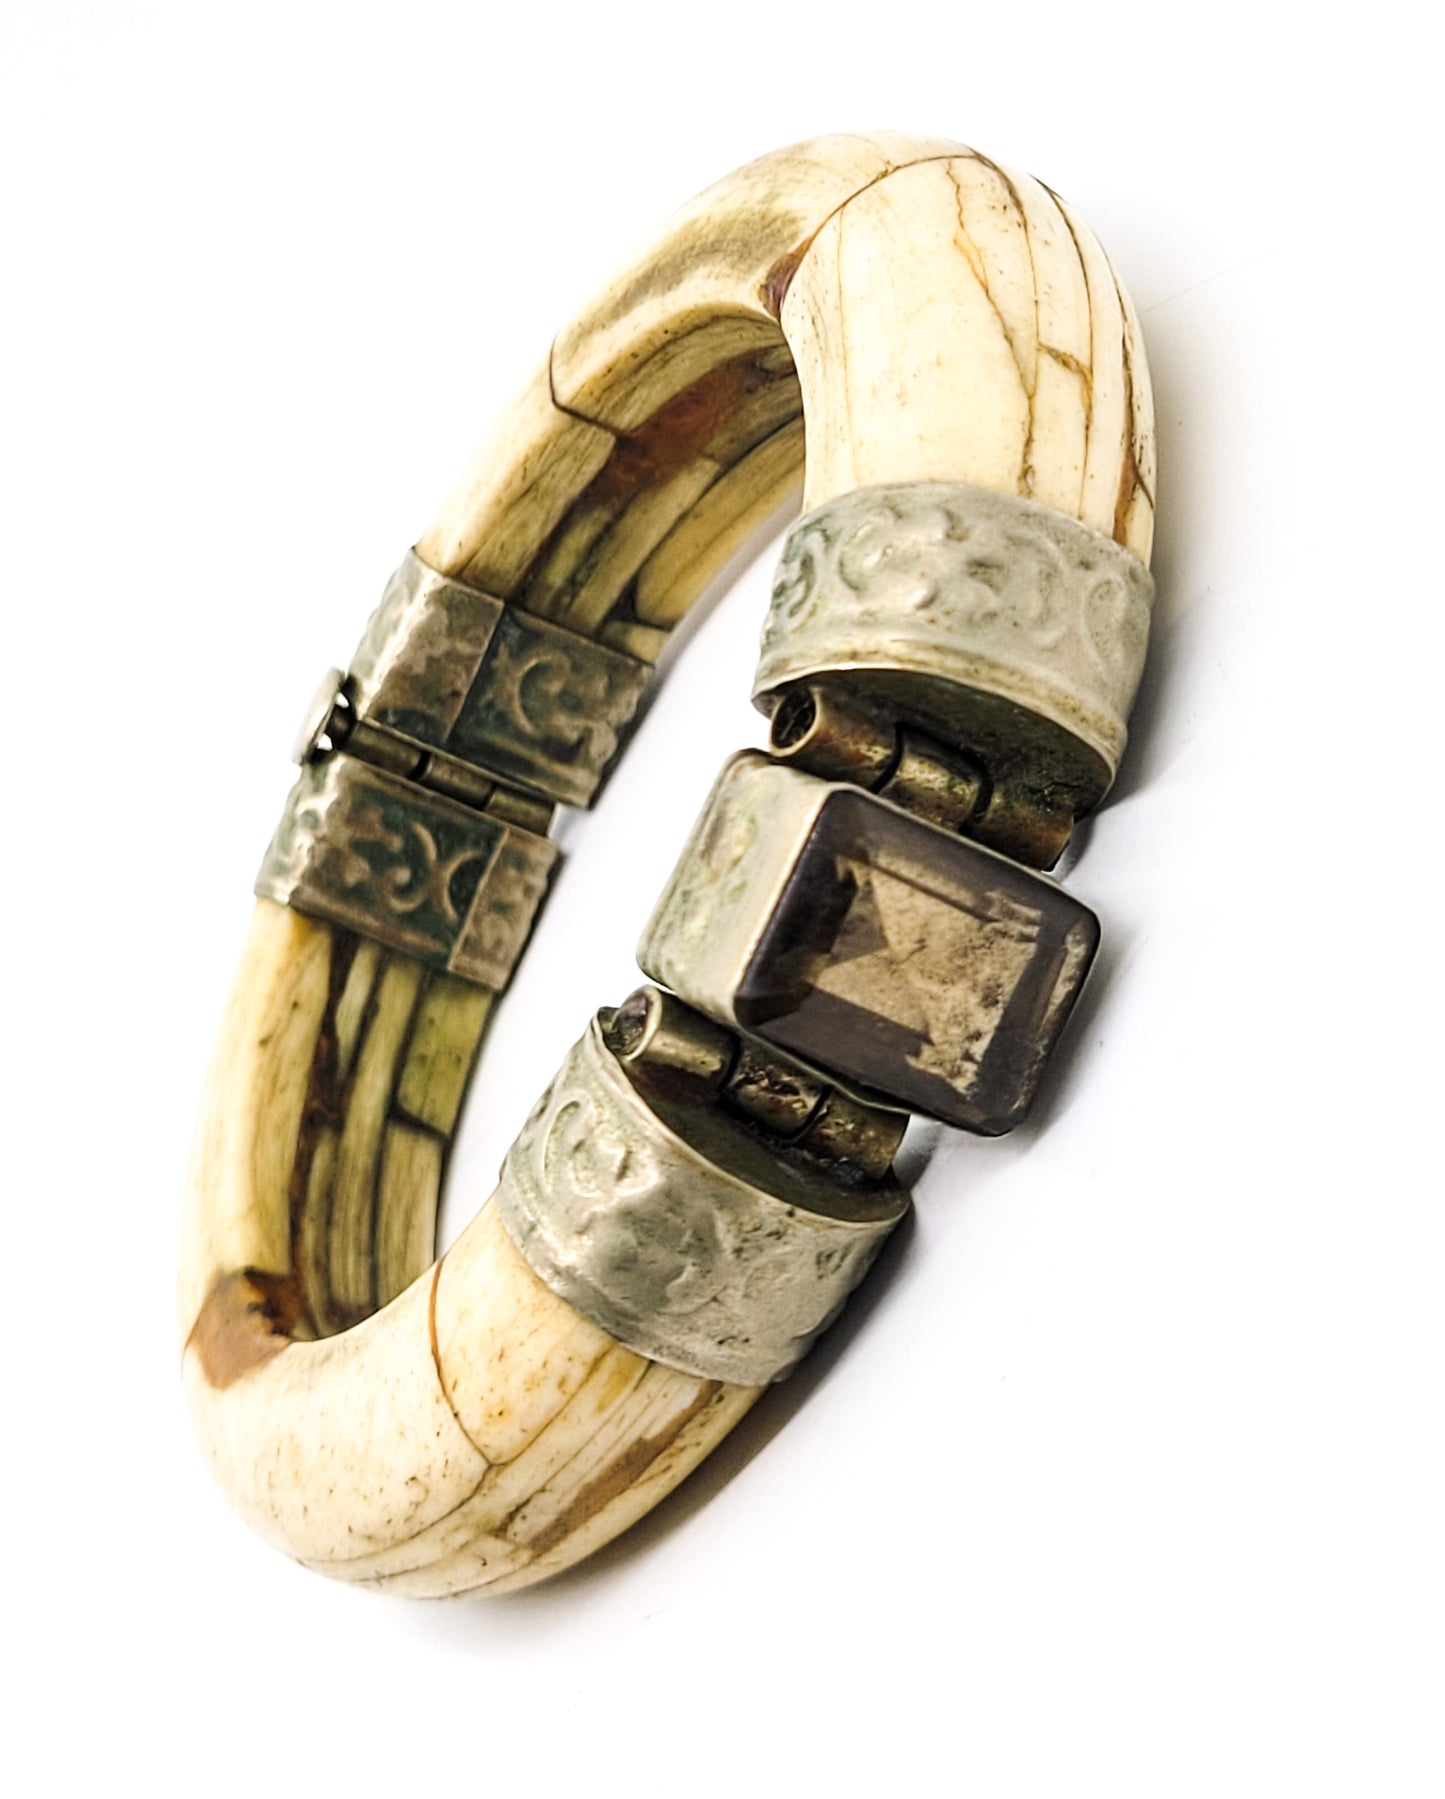 Carved Camel bone hinged smoky quartz gemstone vintage bracelet from India